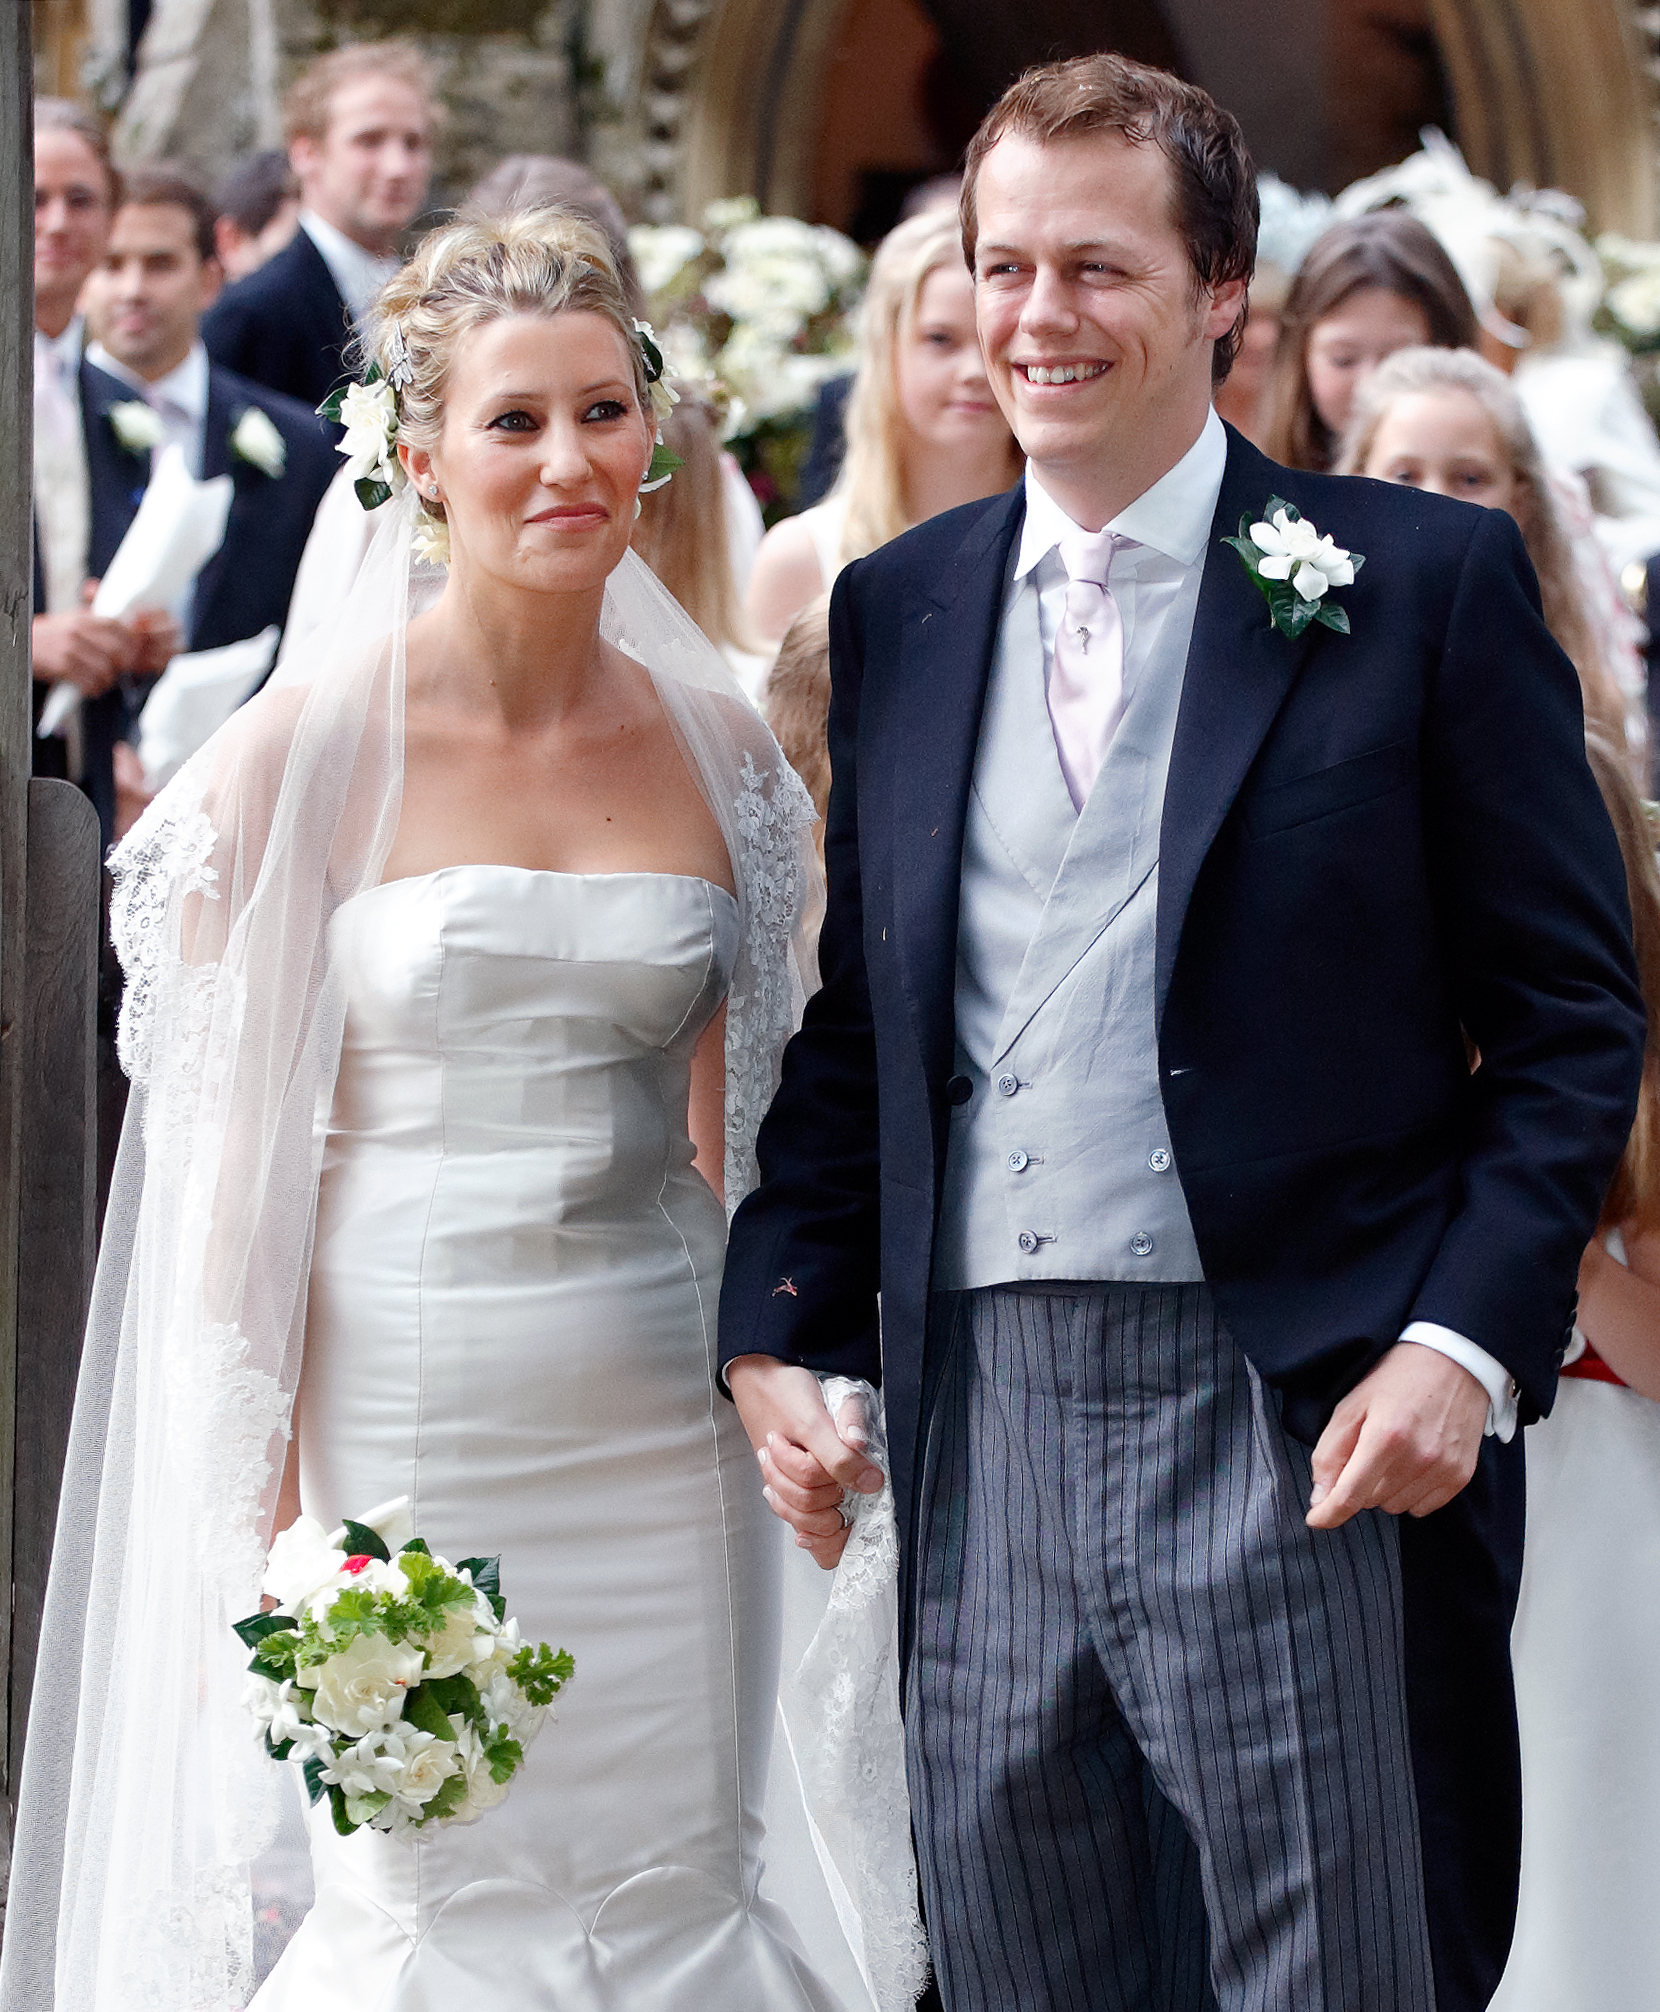 Le mariage de Sara Buys et Tom Parker Bowles, le 10 septembre 2005, à Rotherfield Greys, en Angleterre. | Source : Getty Images